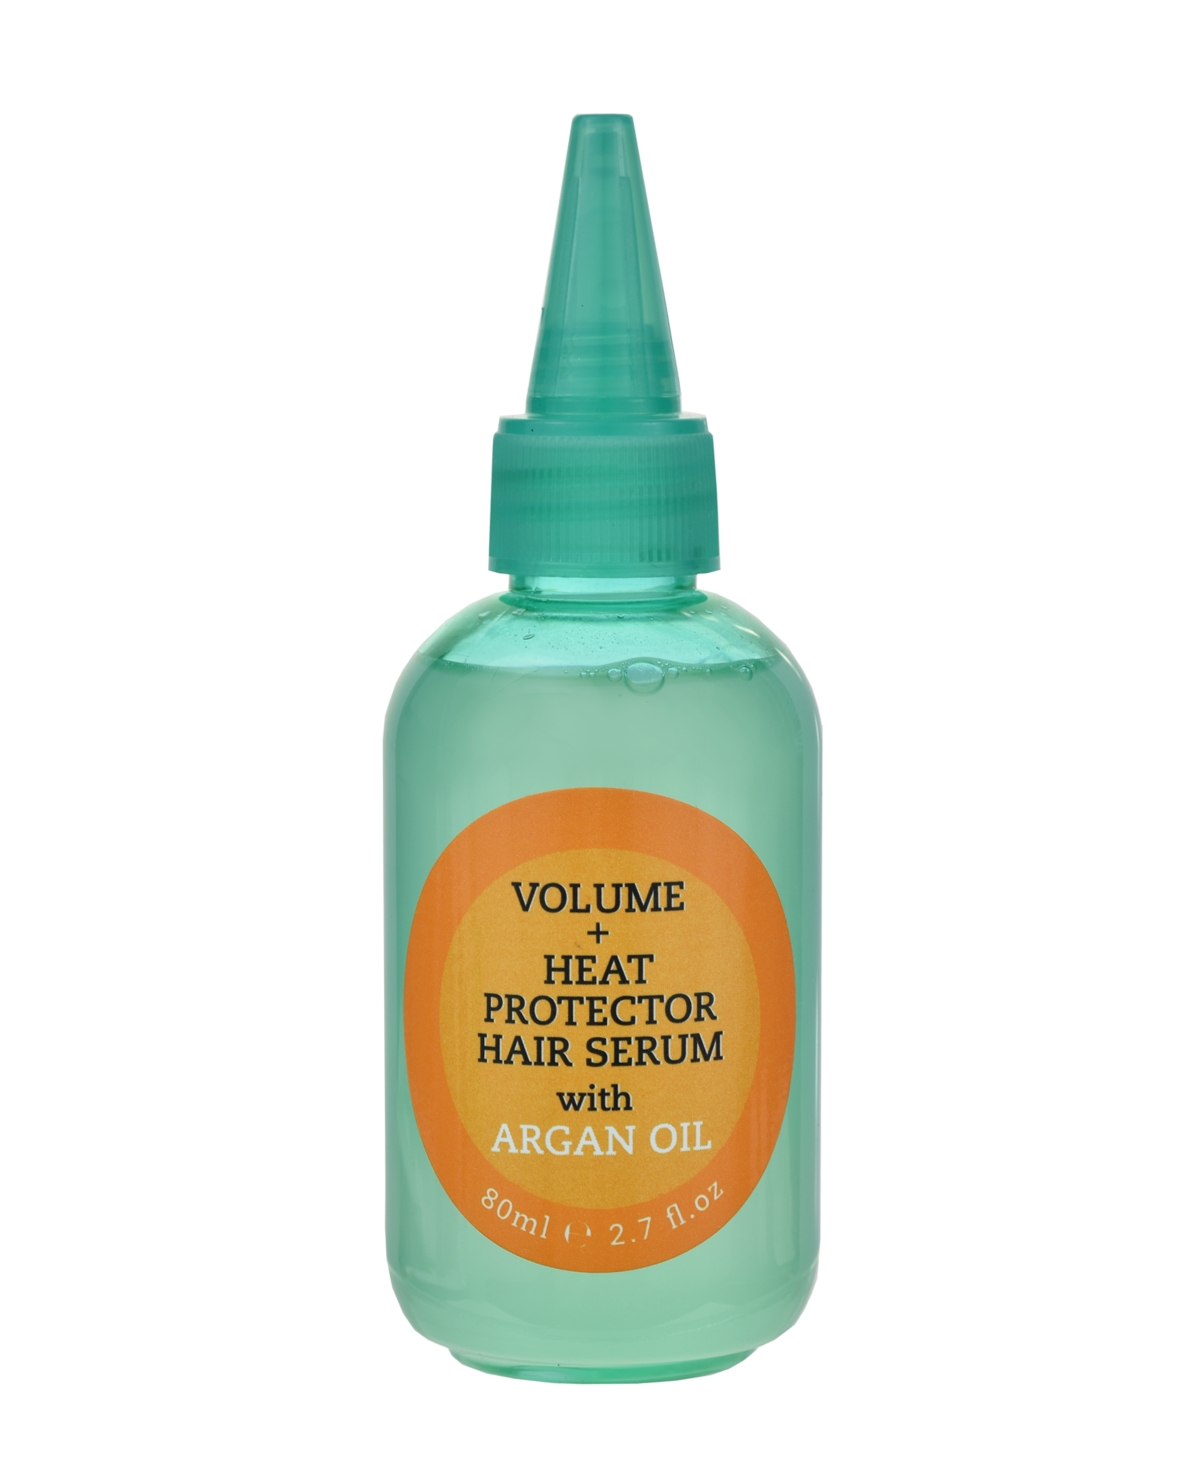 Volume + Heat Protector Hair Serum With Argan Oil, 2.7 oz. - Clear